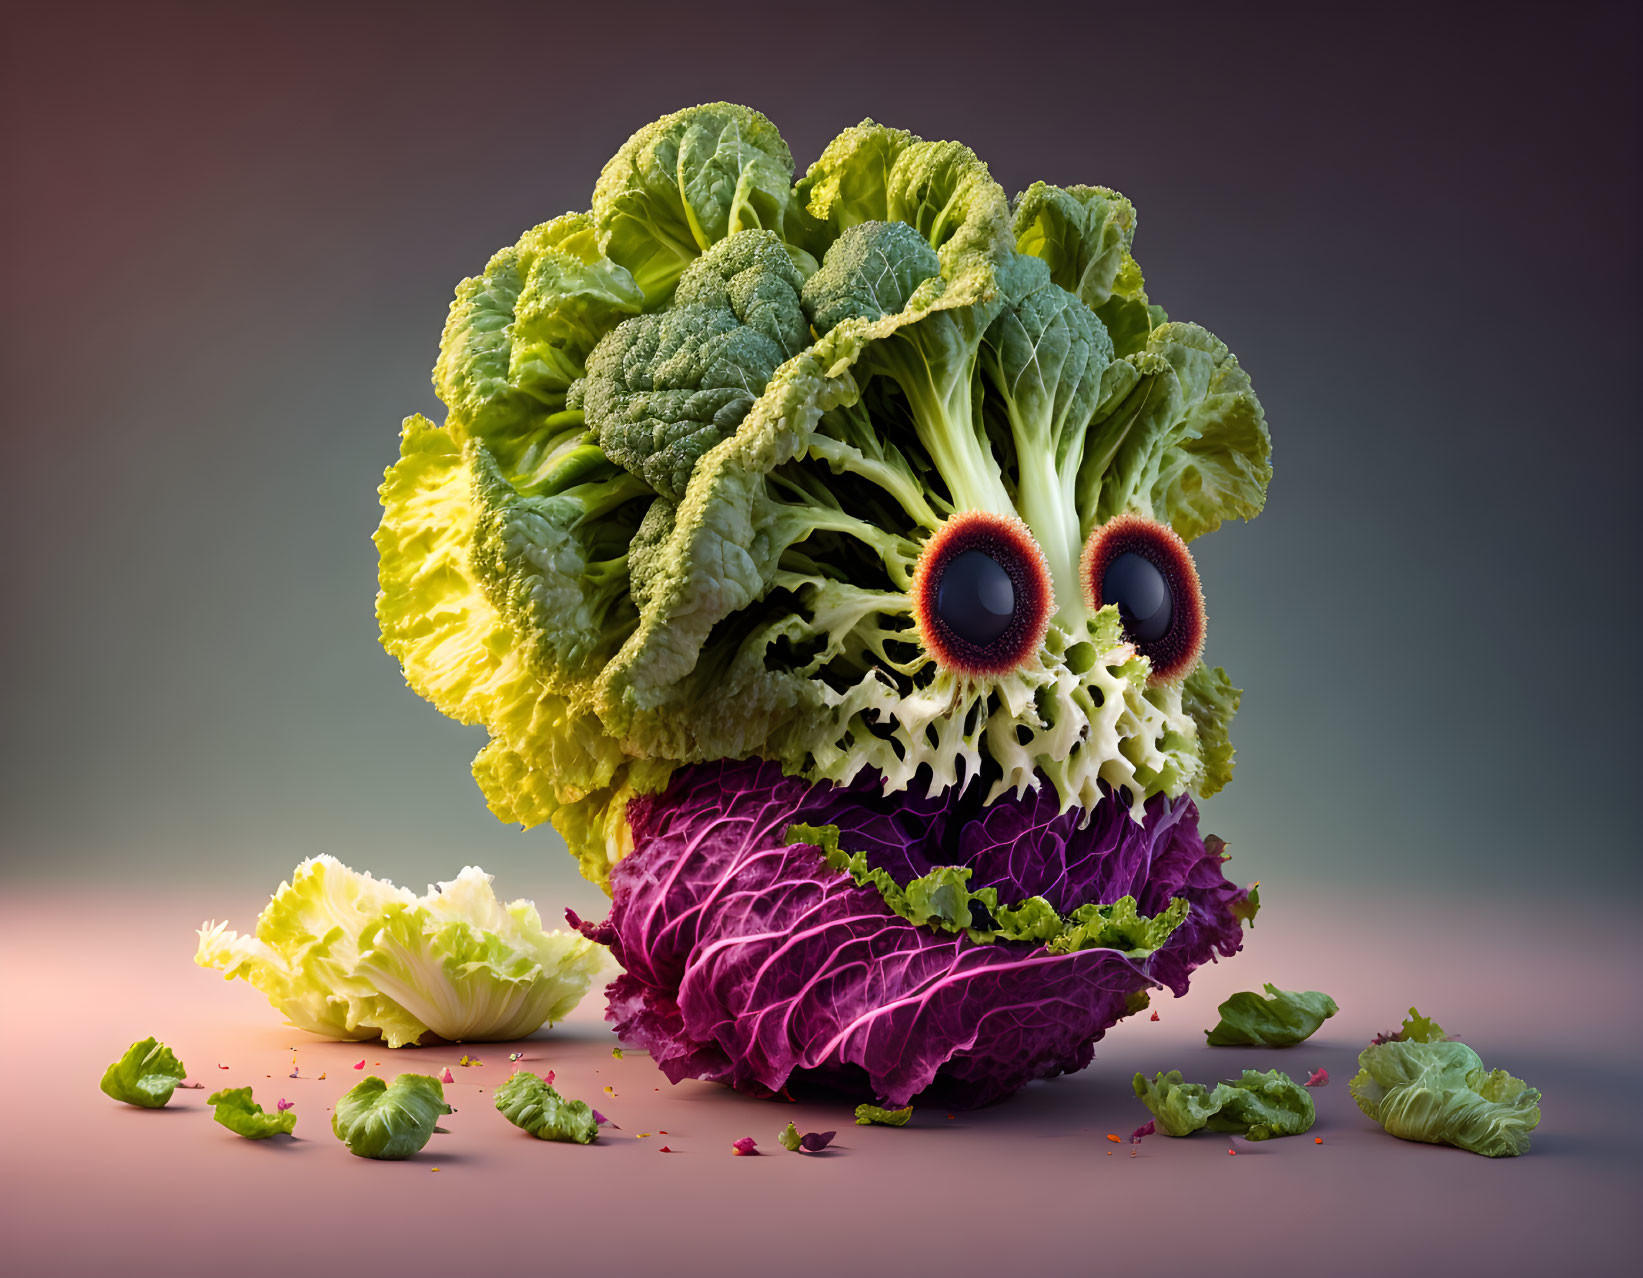 a rabid head of lettuce